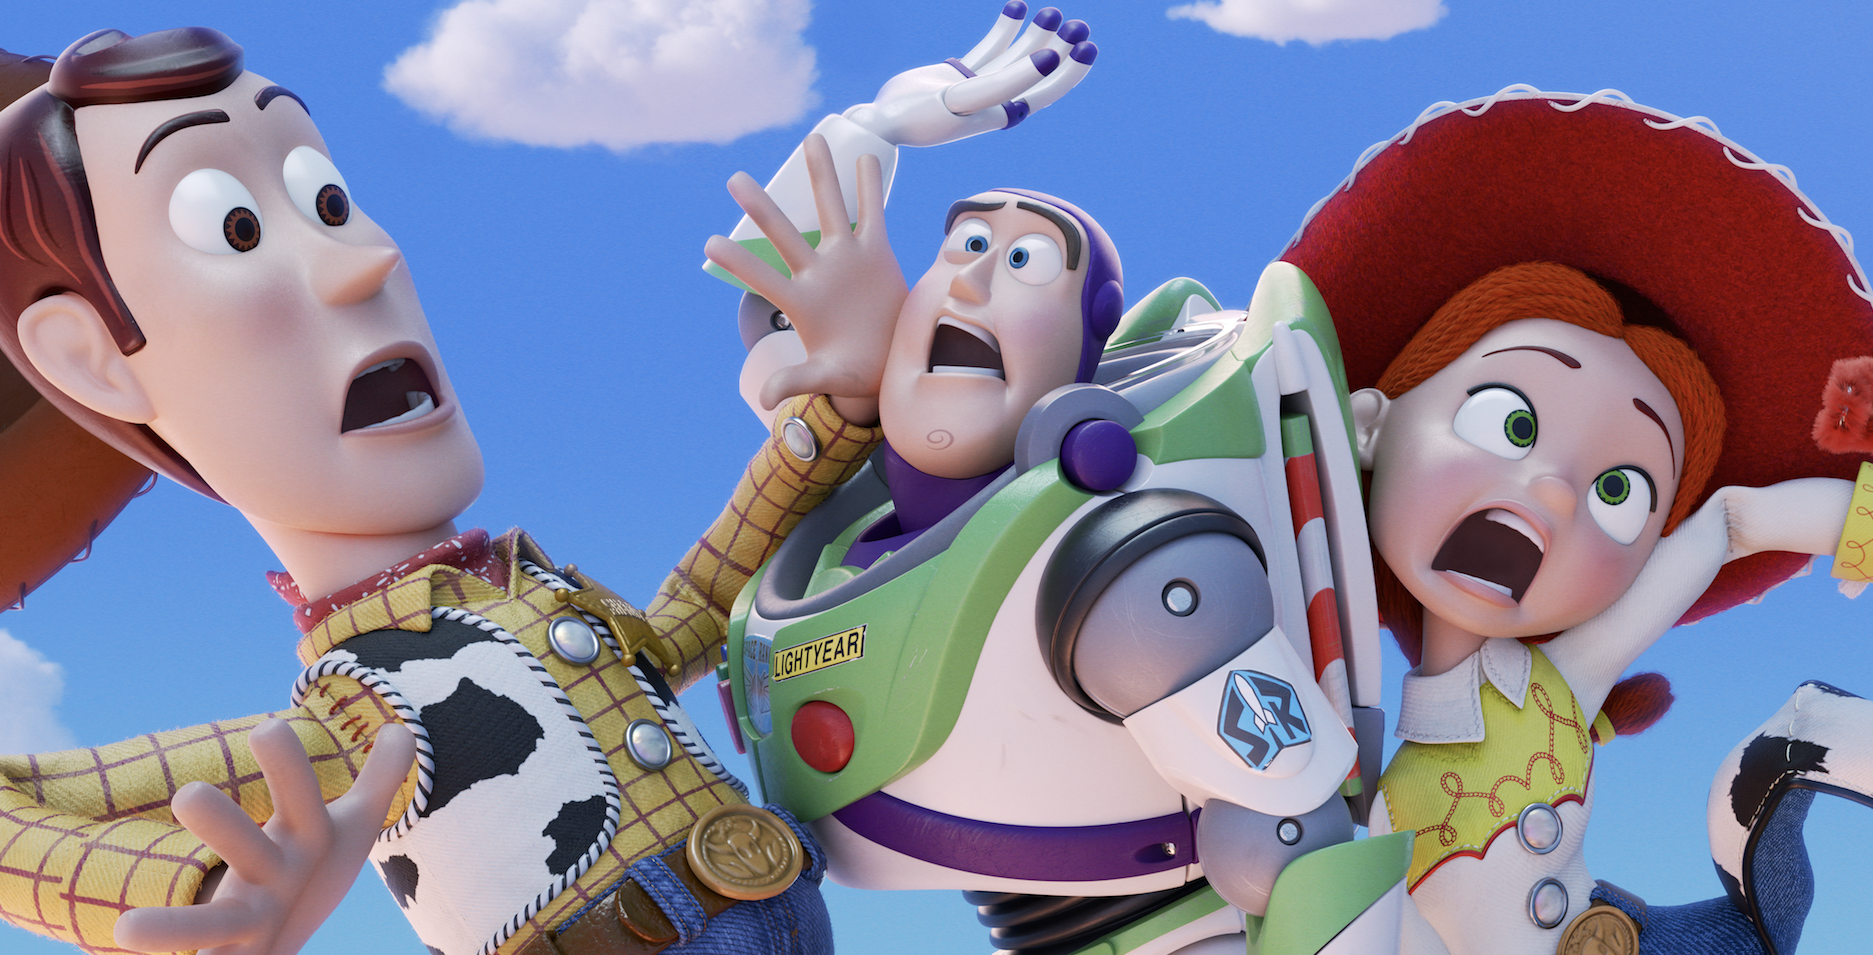 “Agridulce”: ¡este era el final alternativo para Toy Story 4!